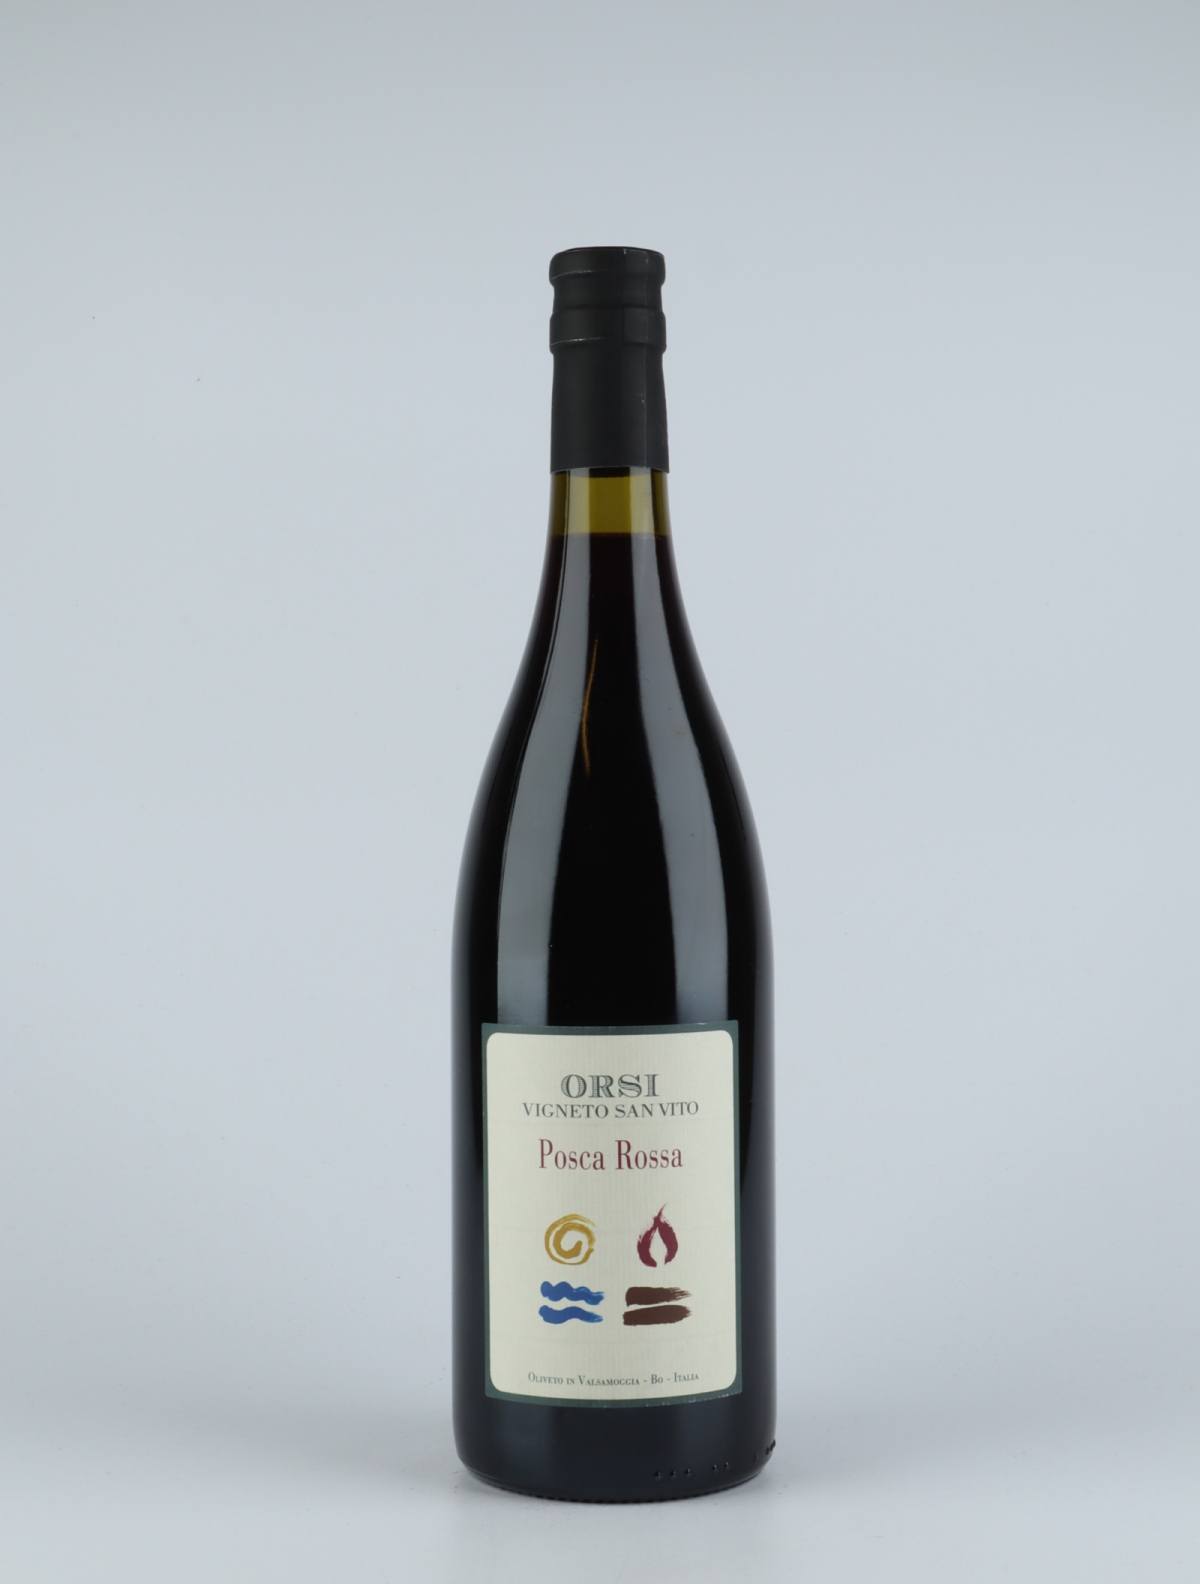 A bottle N.V. Posca Rossa Red wine from Orsi - San Vito, Emilia-Romagna in Italy